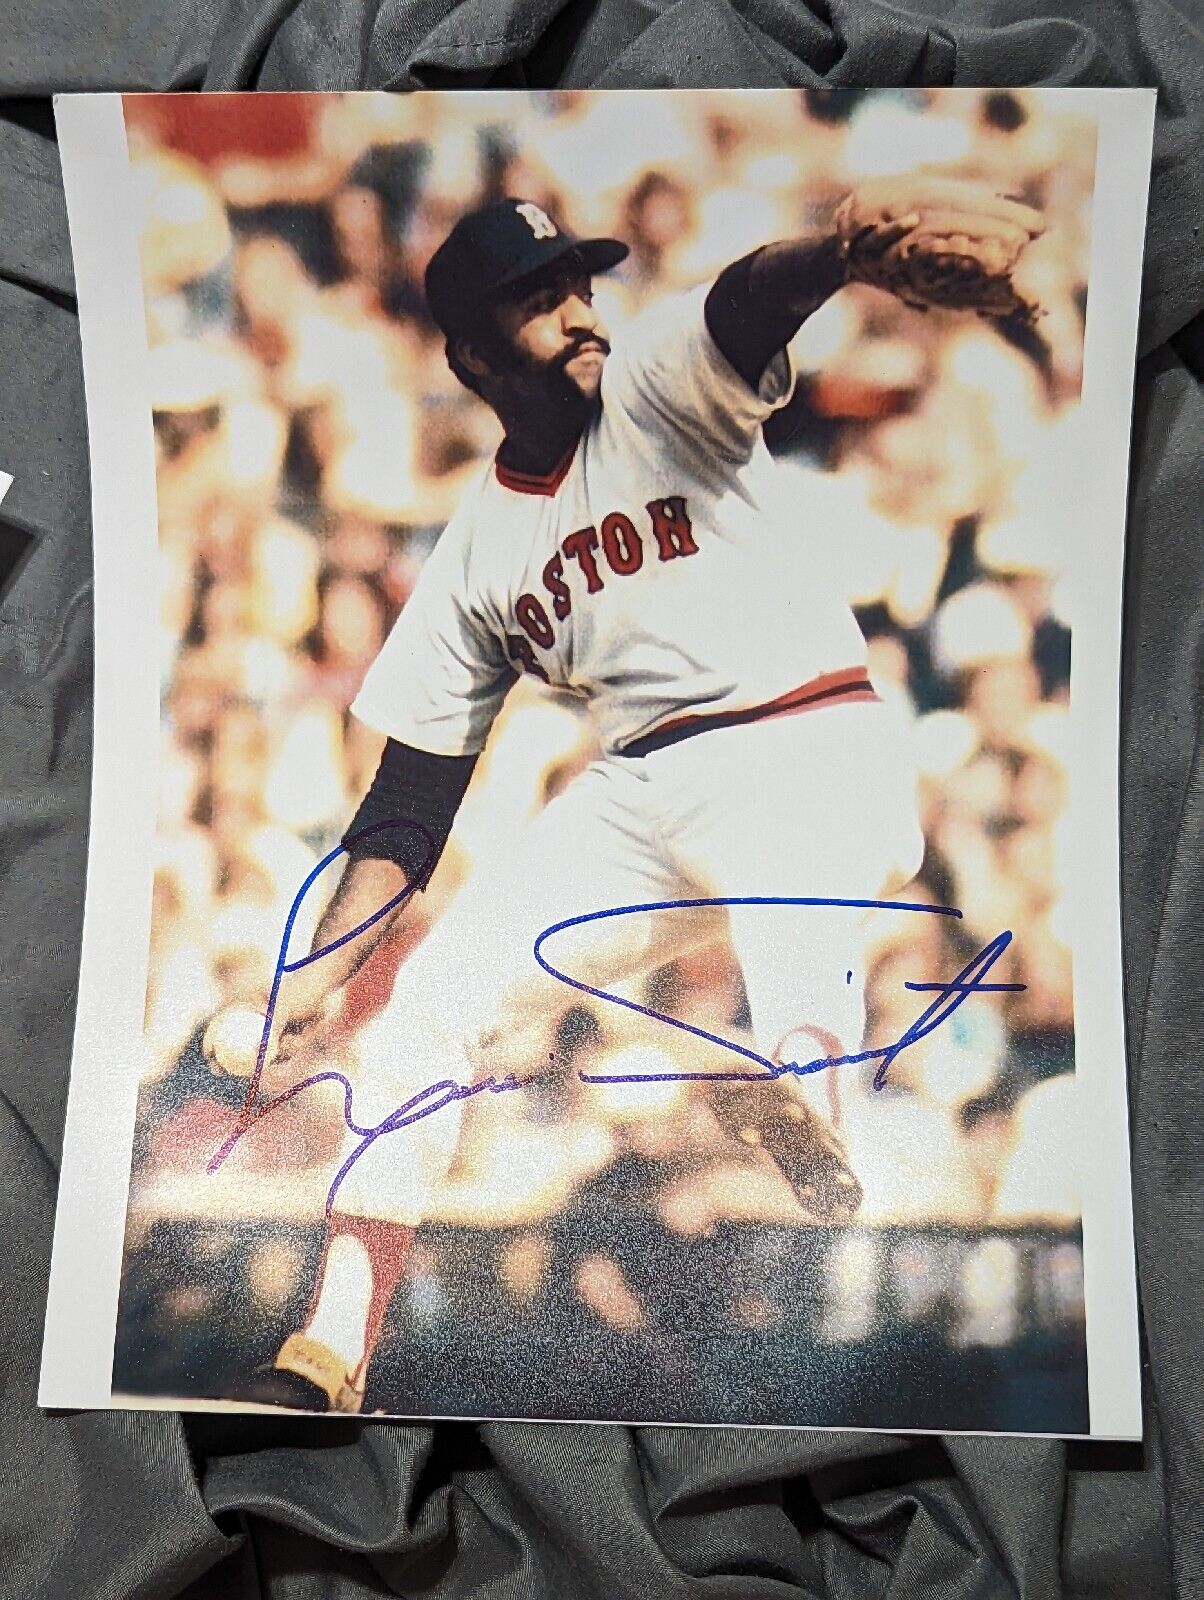 BOGO Autograph Signed Photos Luis Tiant Boston Red Sox 